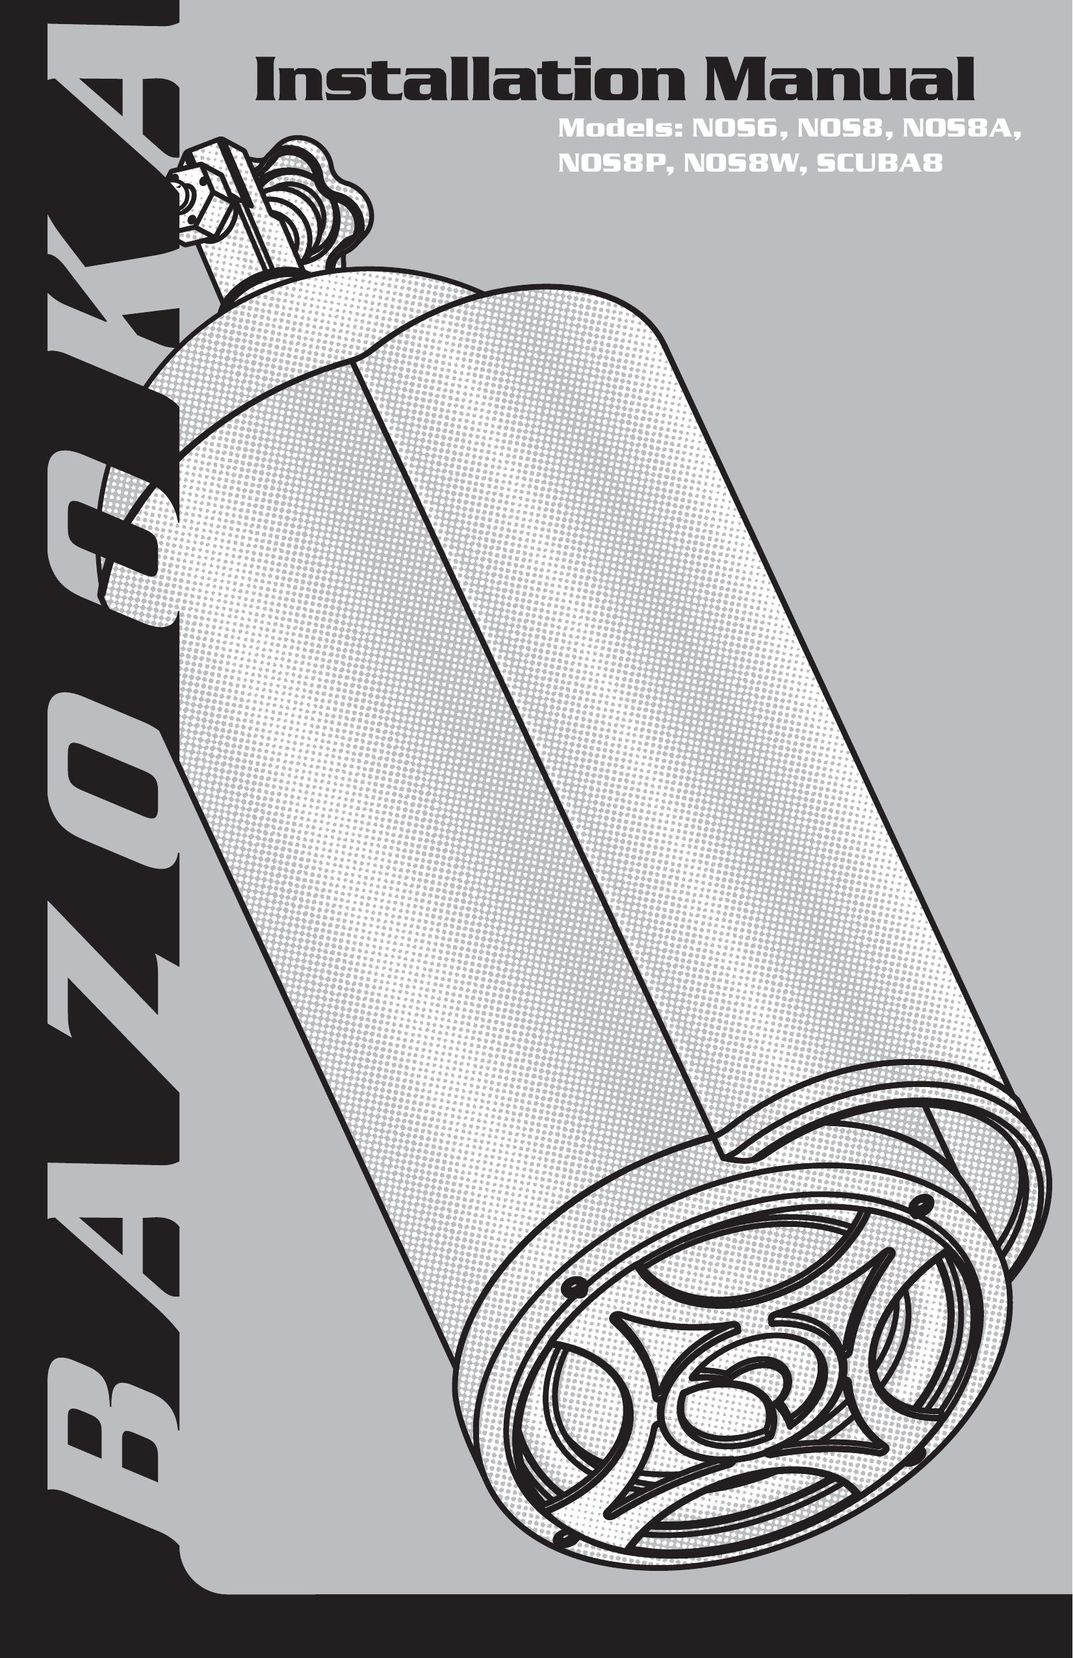 Bazooka NOS8A Car Stereo System User Manual